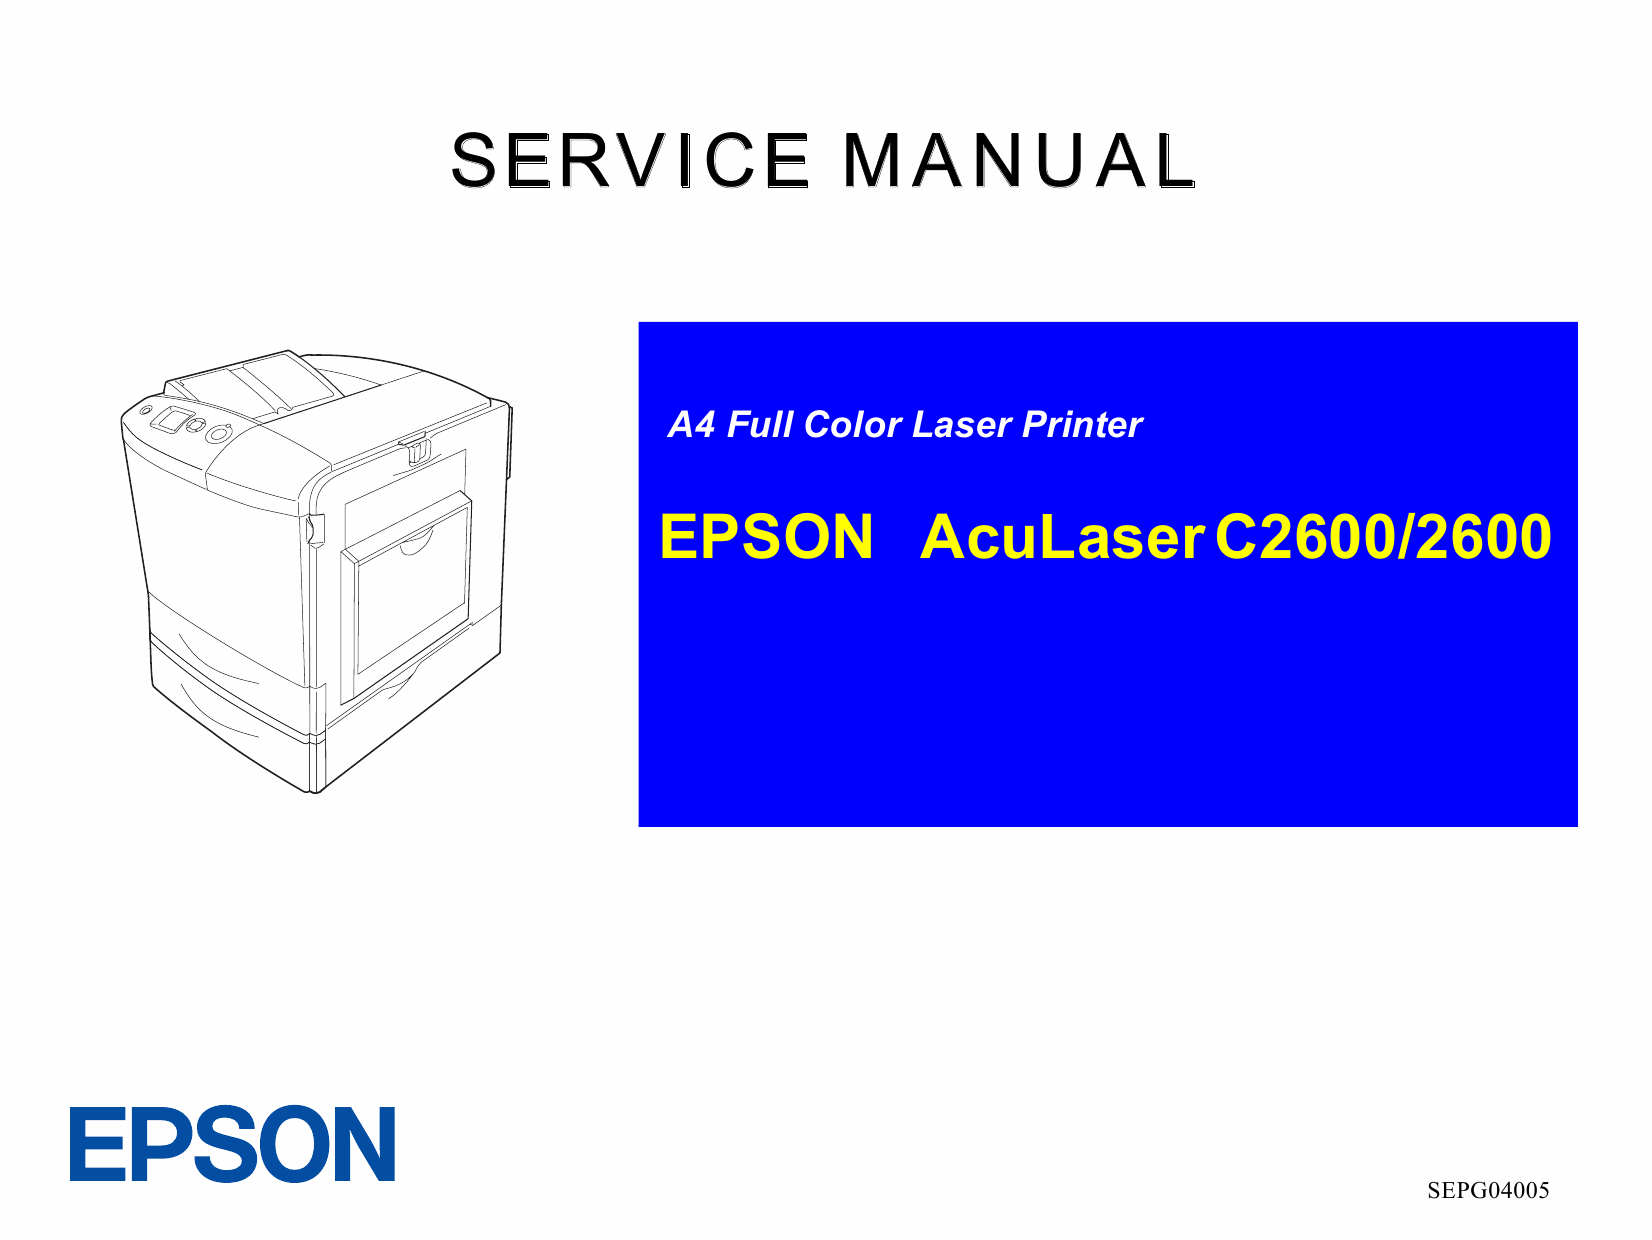 EPSON AcuLaser C2600 Service Manual-1